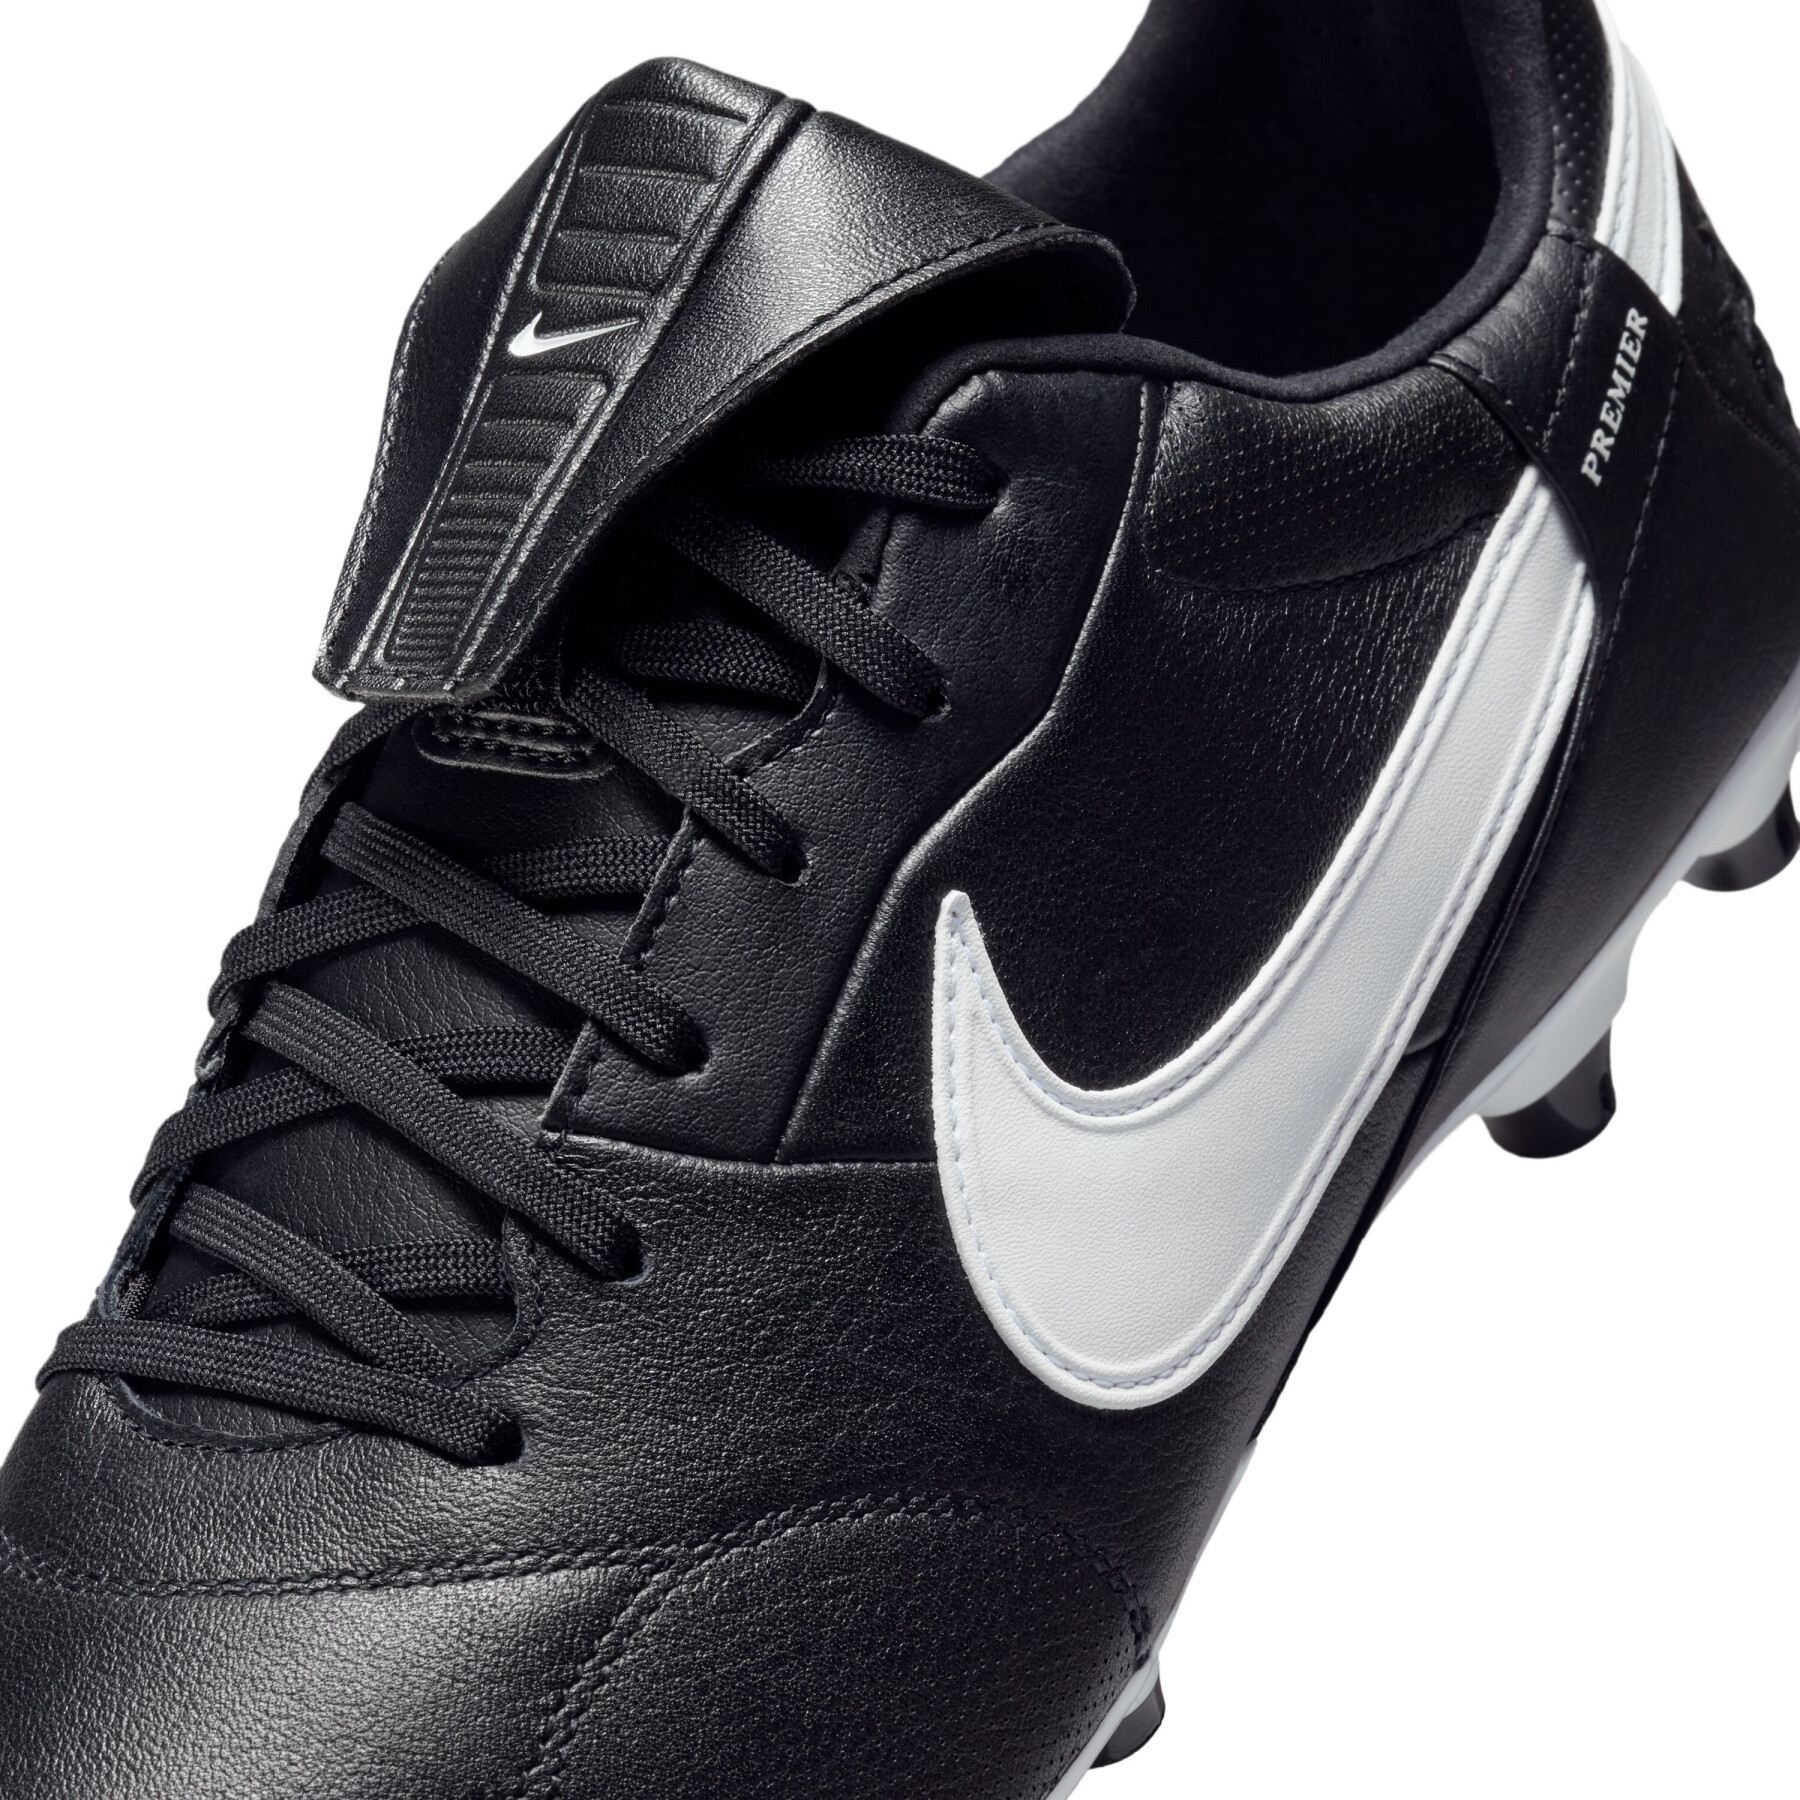 Soccer shoes Nike The Premier III FG